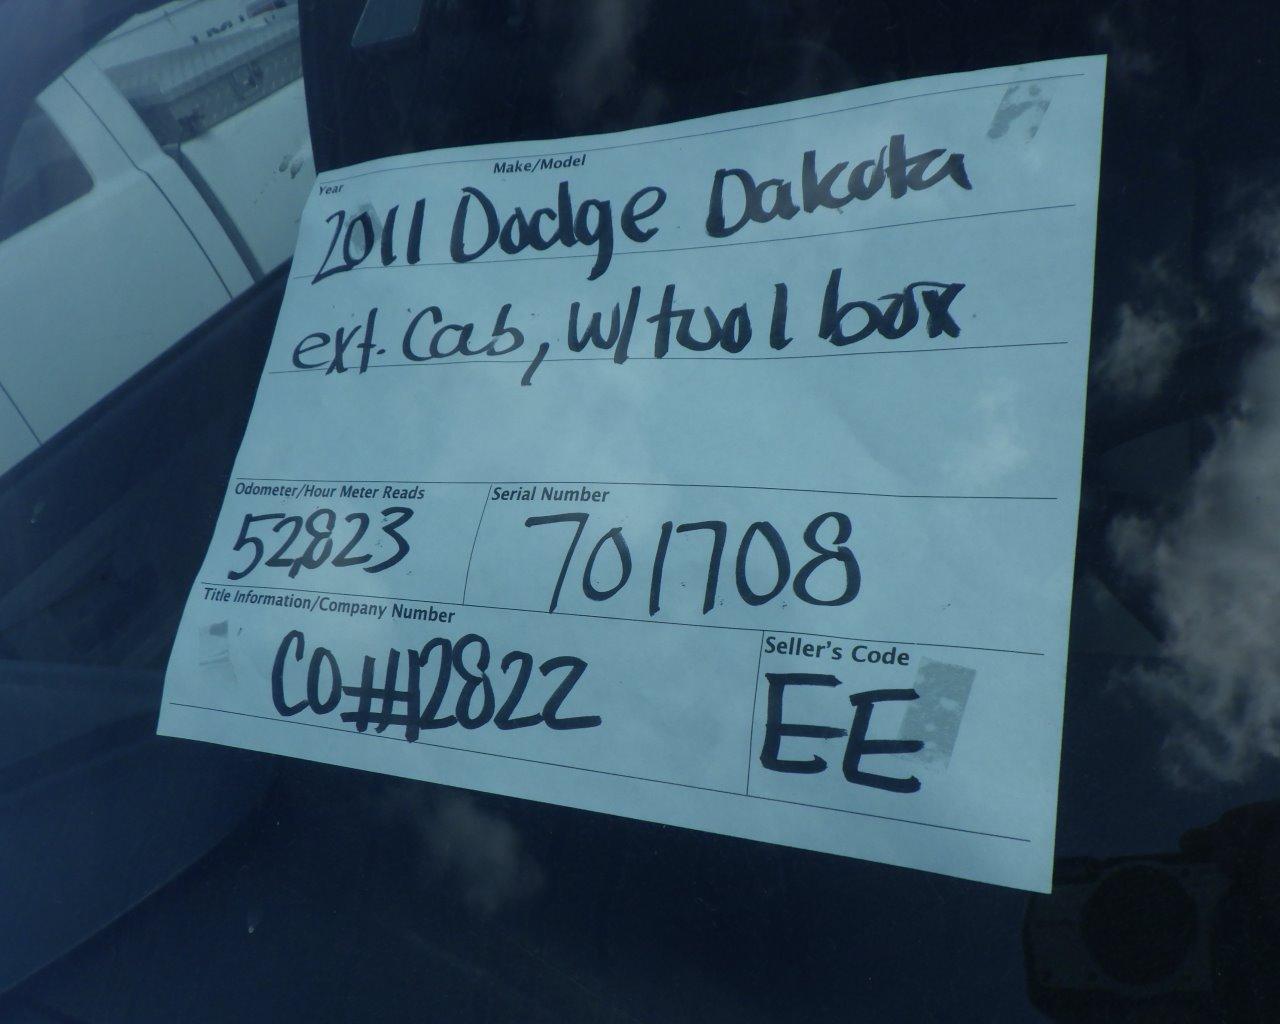 2011 DODGE Dakota Ext Cab   Tool Box   s/n:701708